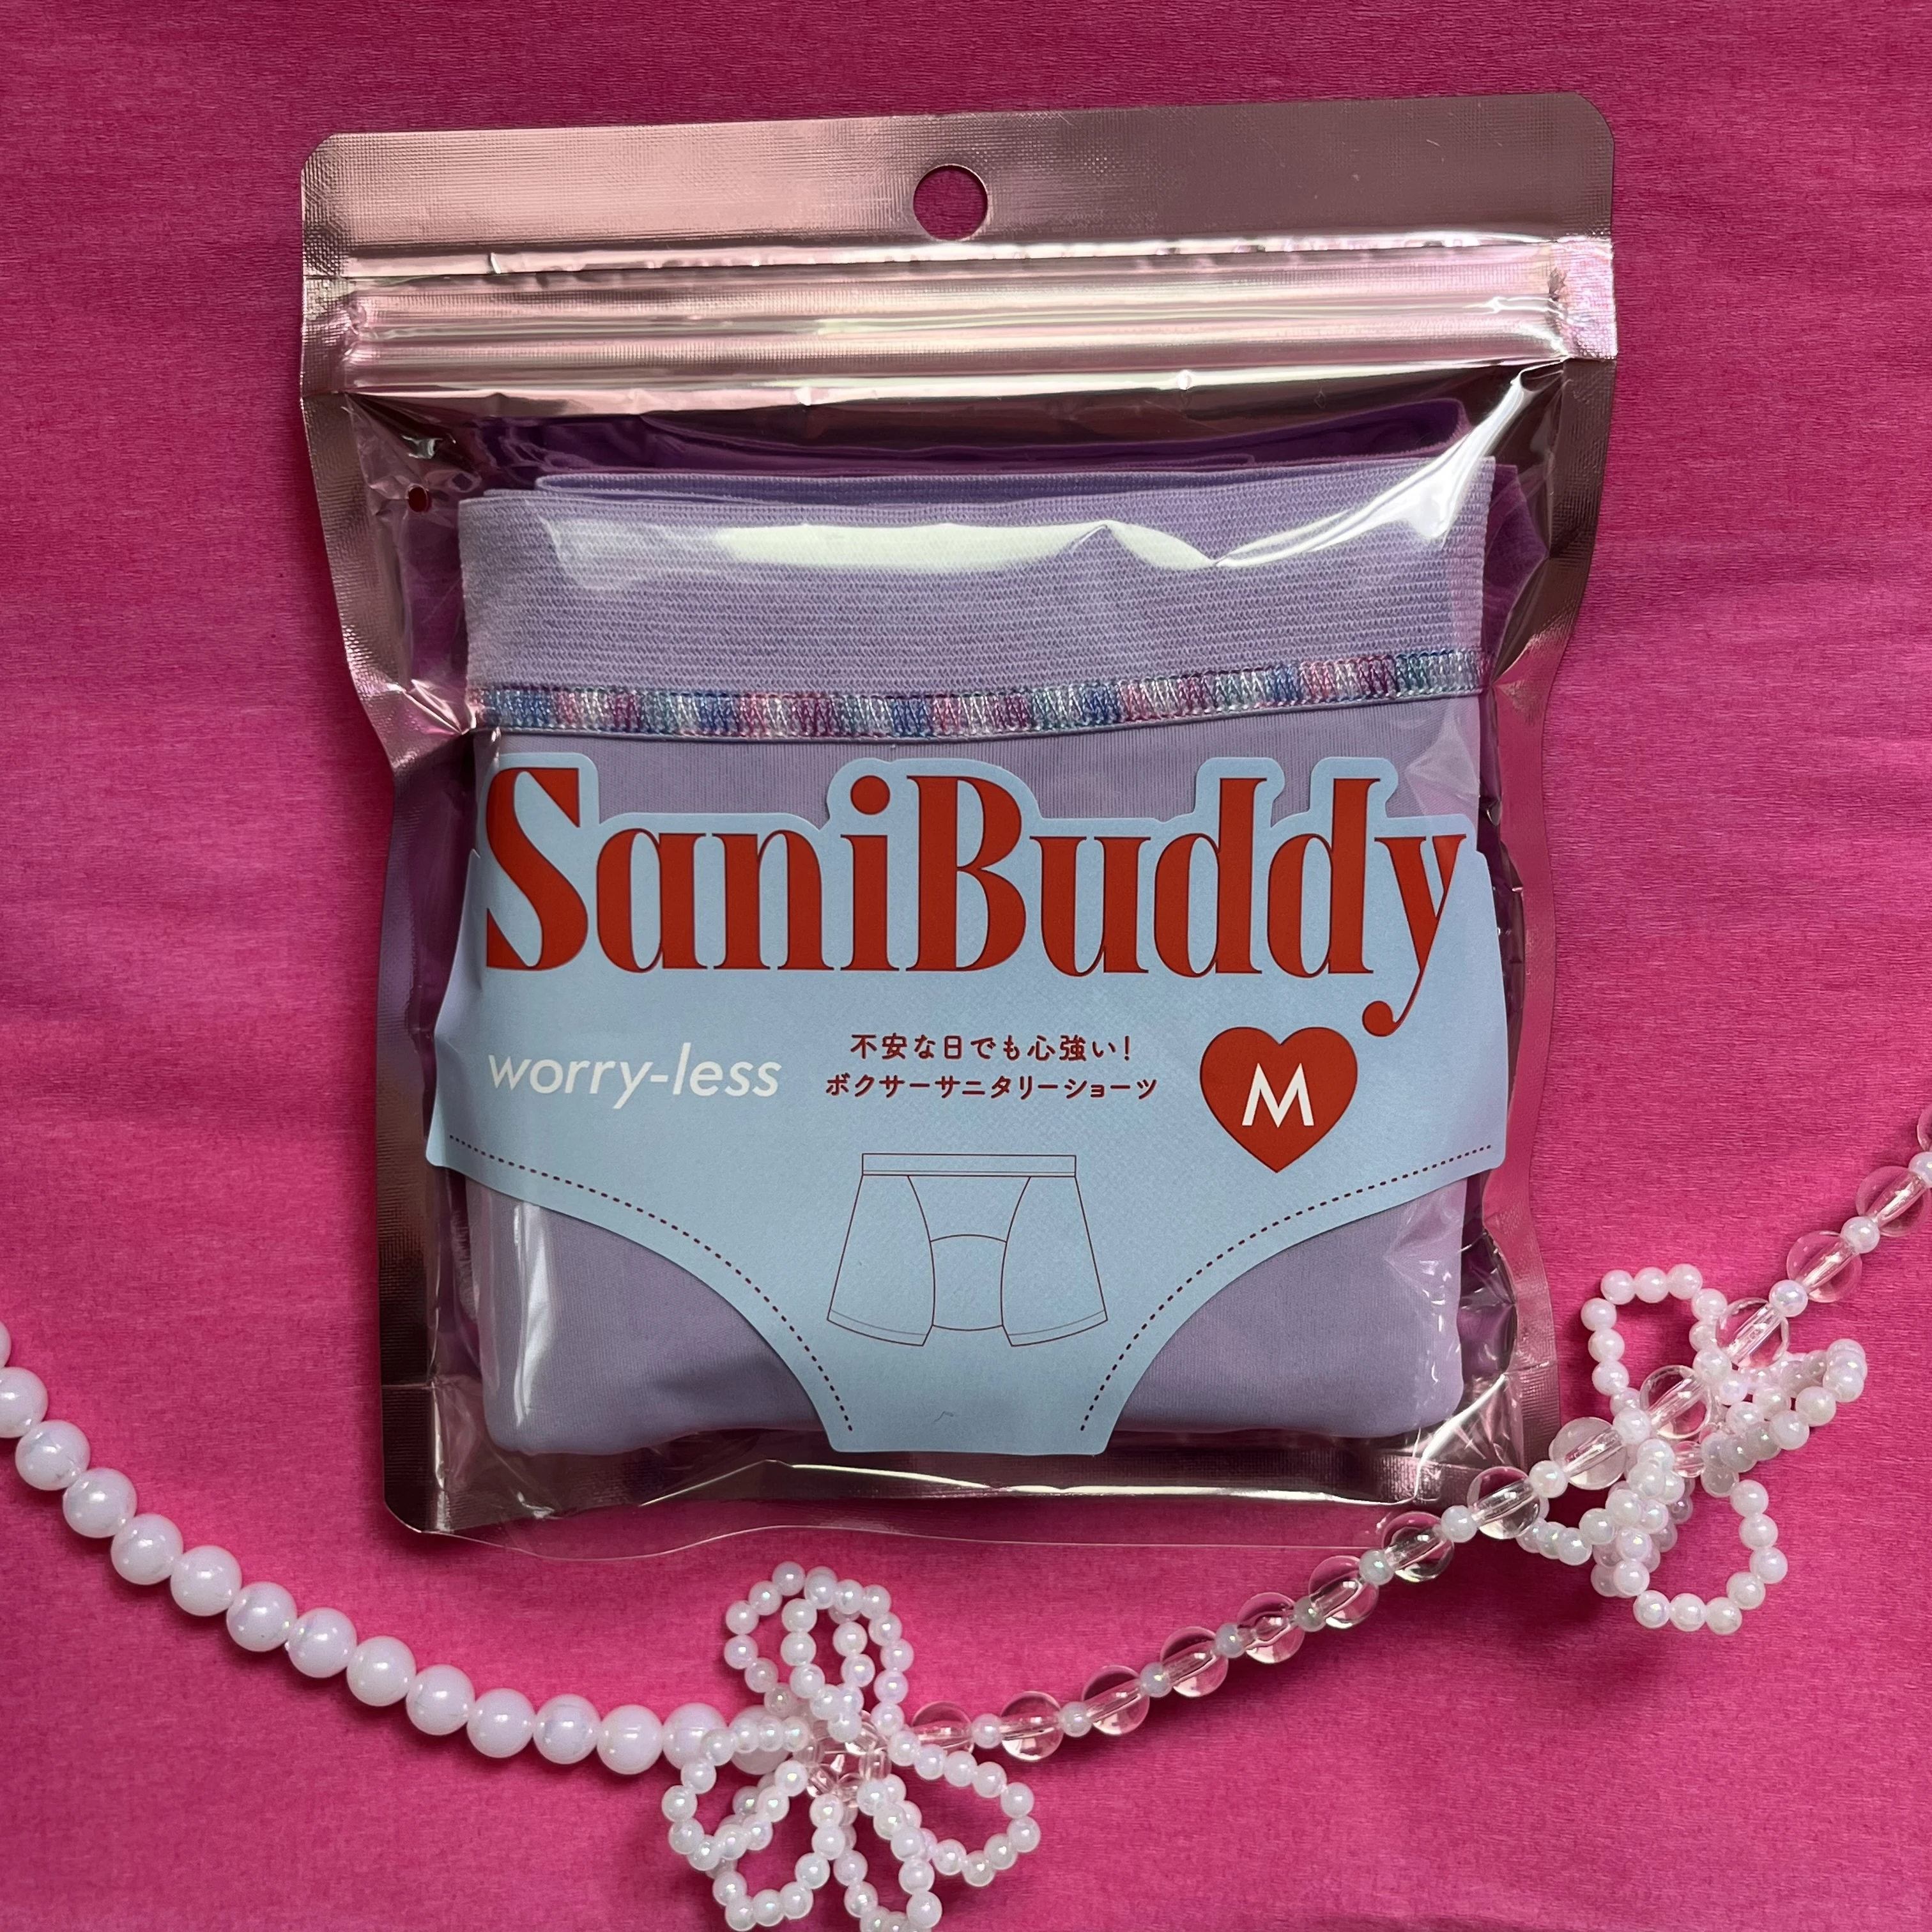 SaniBuddy「worry-less」のパッケージ